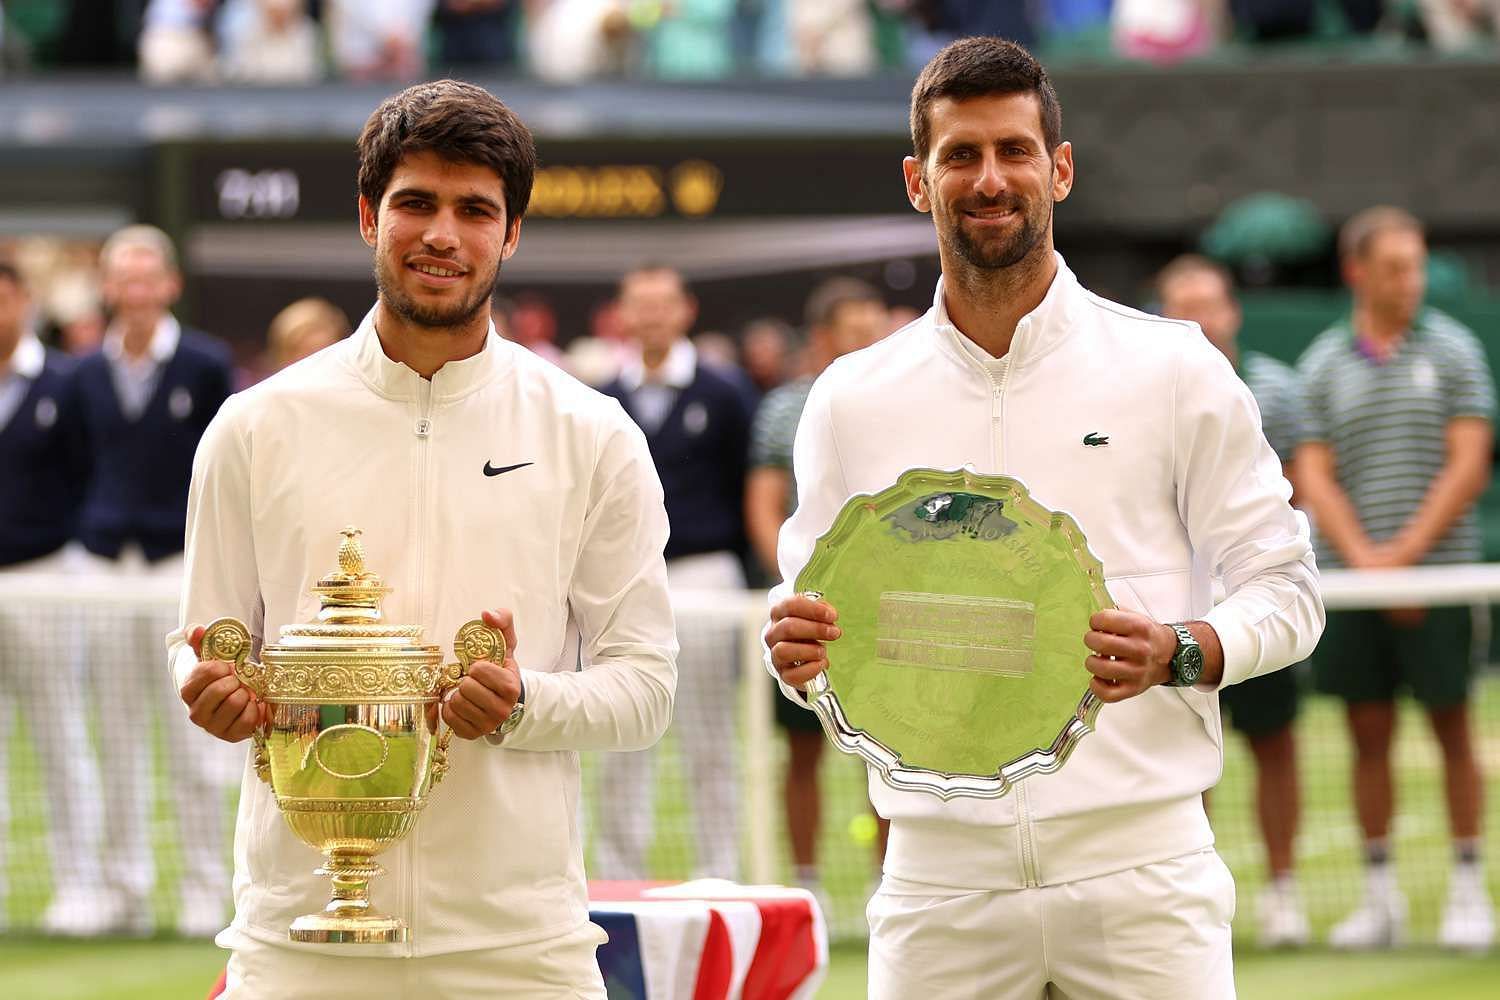 Novak Djokovic and Carlos Alcaraz faced off in a five-set final at Wimbledon this year